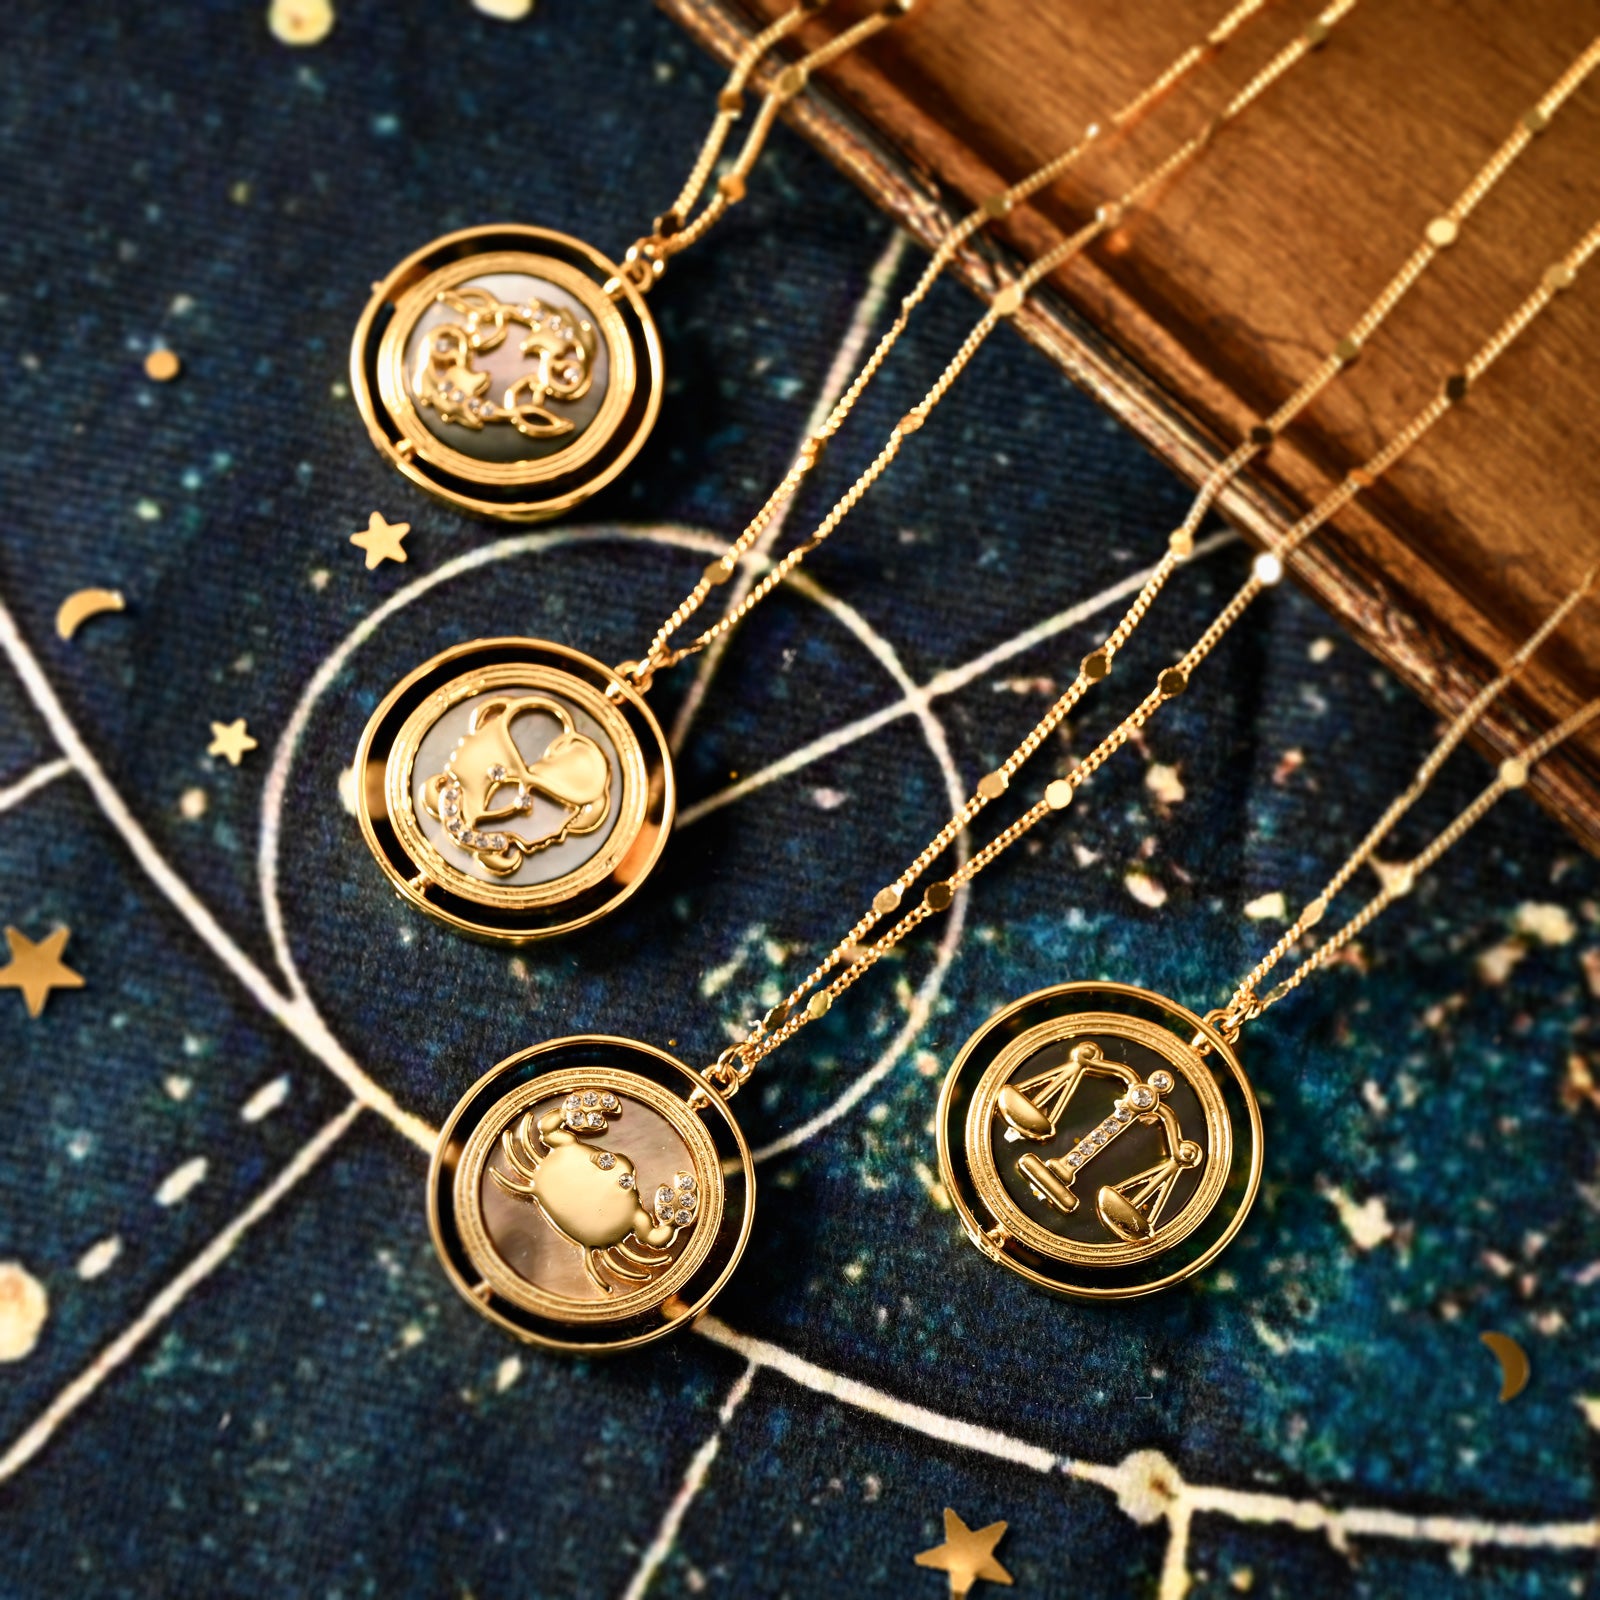 Cancer Astrology Necklace